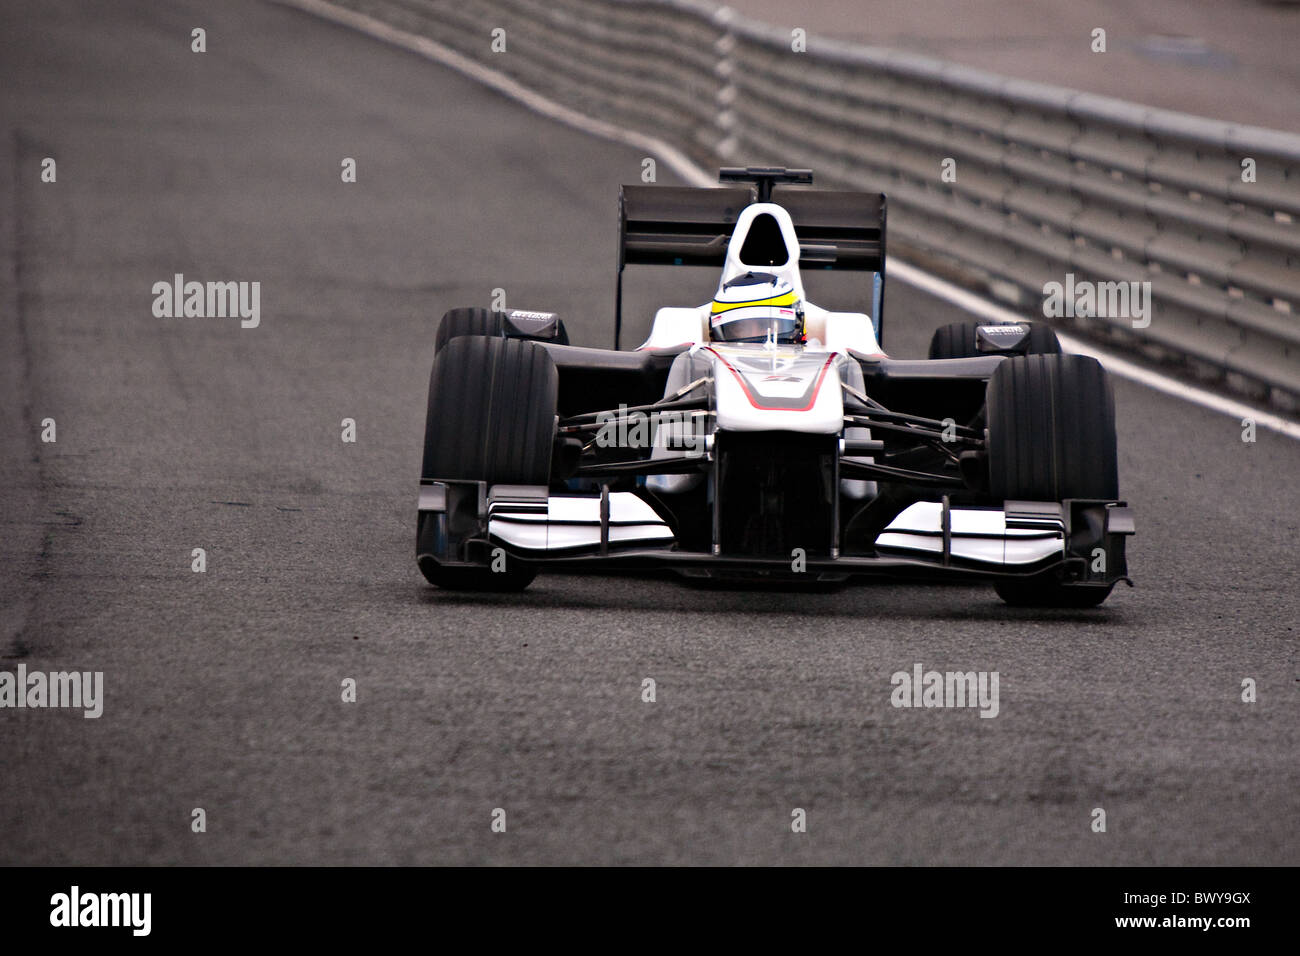 13.02.2010, Exit, Formel 1, Jerez, P. De La Rosa, Pit Lane, Sauber-BMW, Test, nass Stockfoto